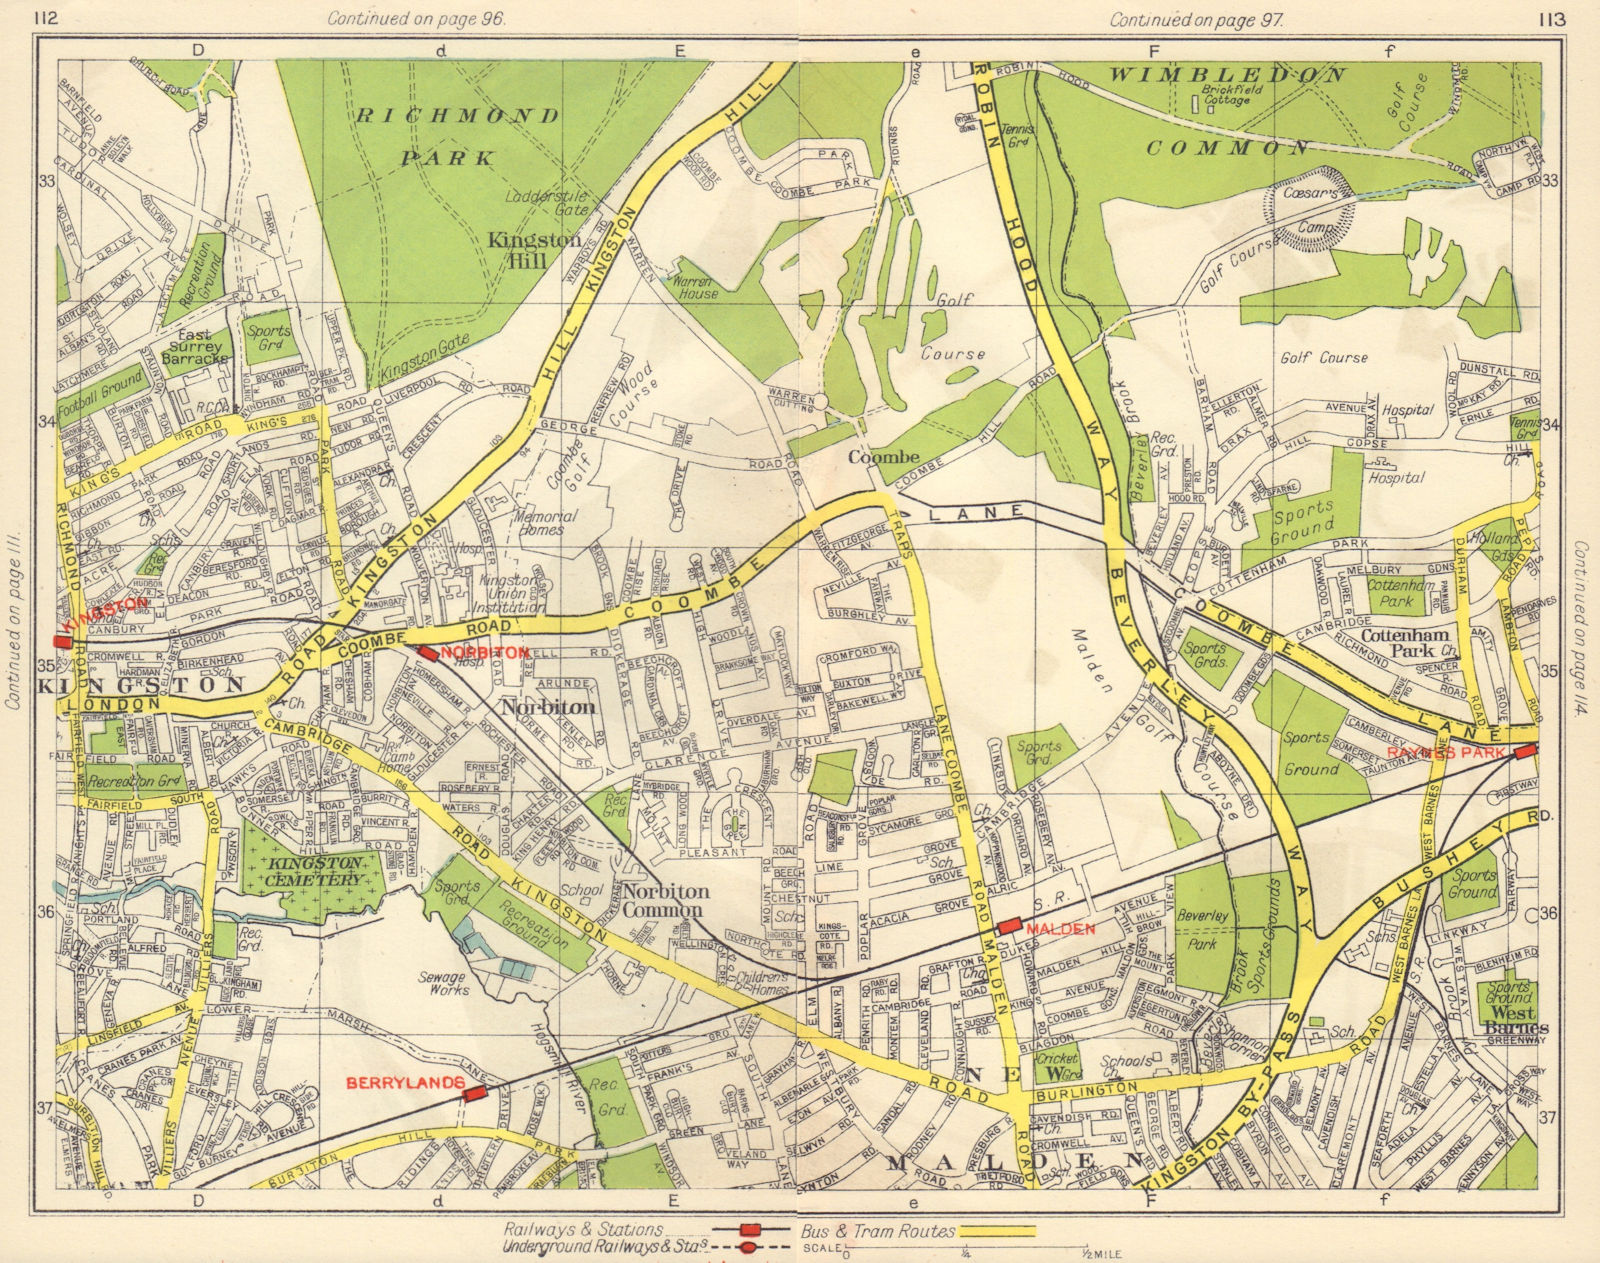 SW LONDON. Kingston Coombe Norbiton New Malden Berrylands Wimbledon 1948 map